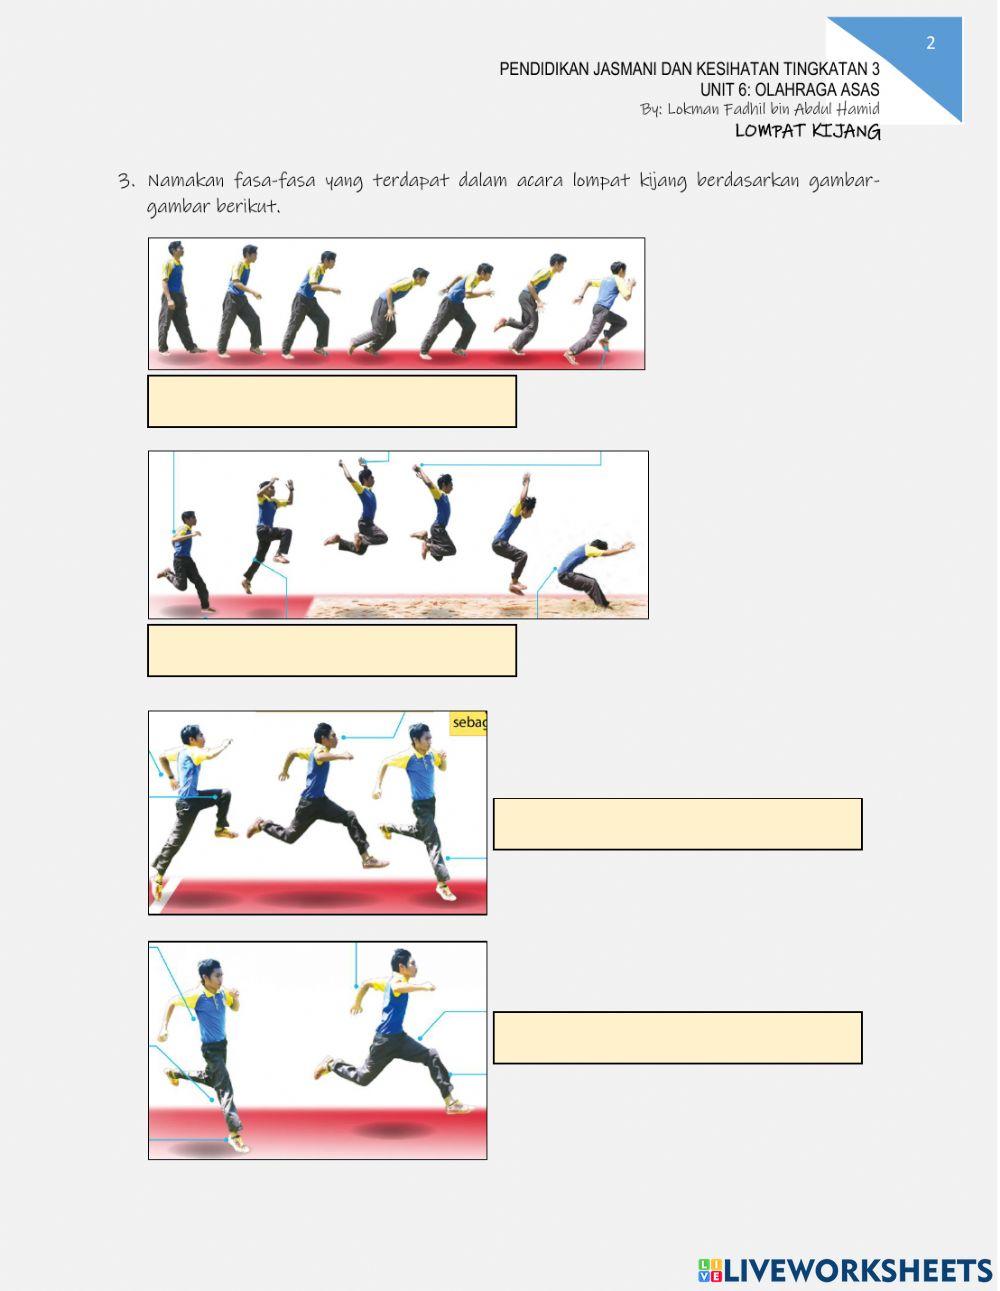 PJK Tingkatan 3: Olahraga Asas - lompat kijang